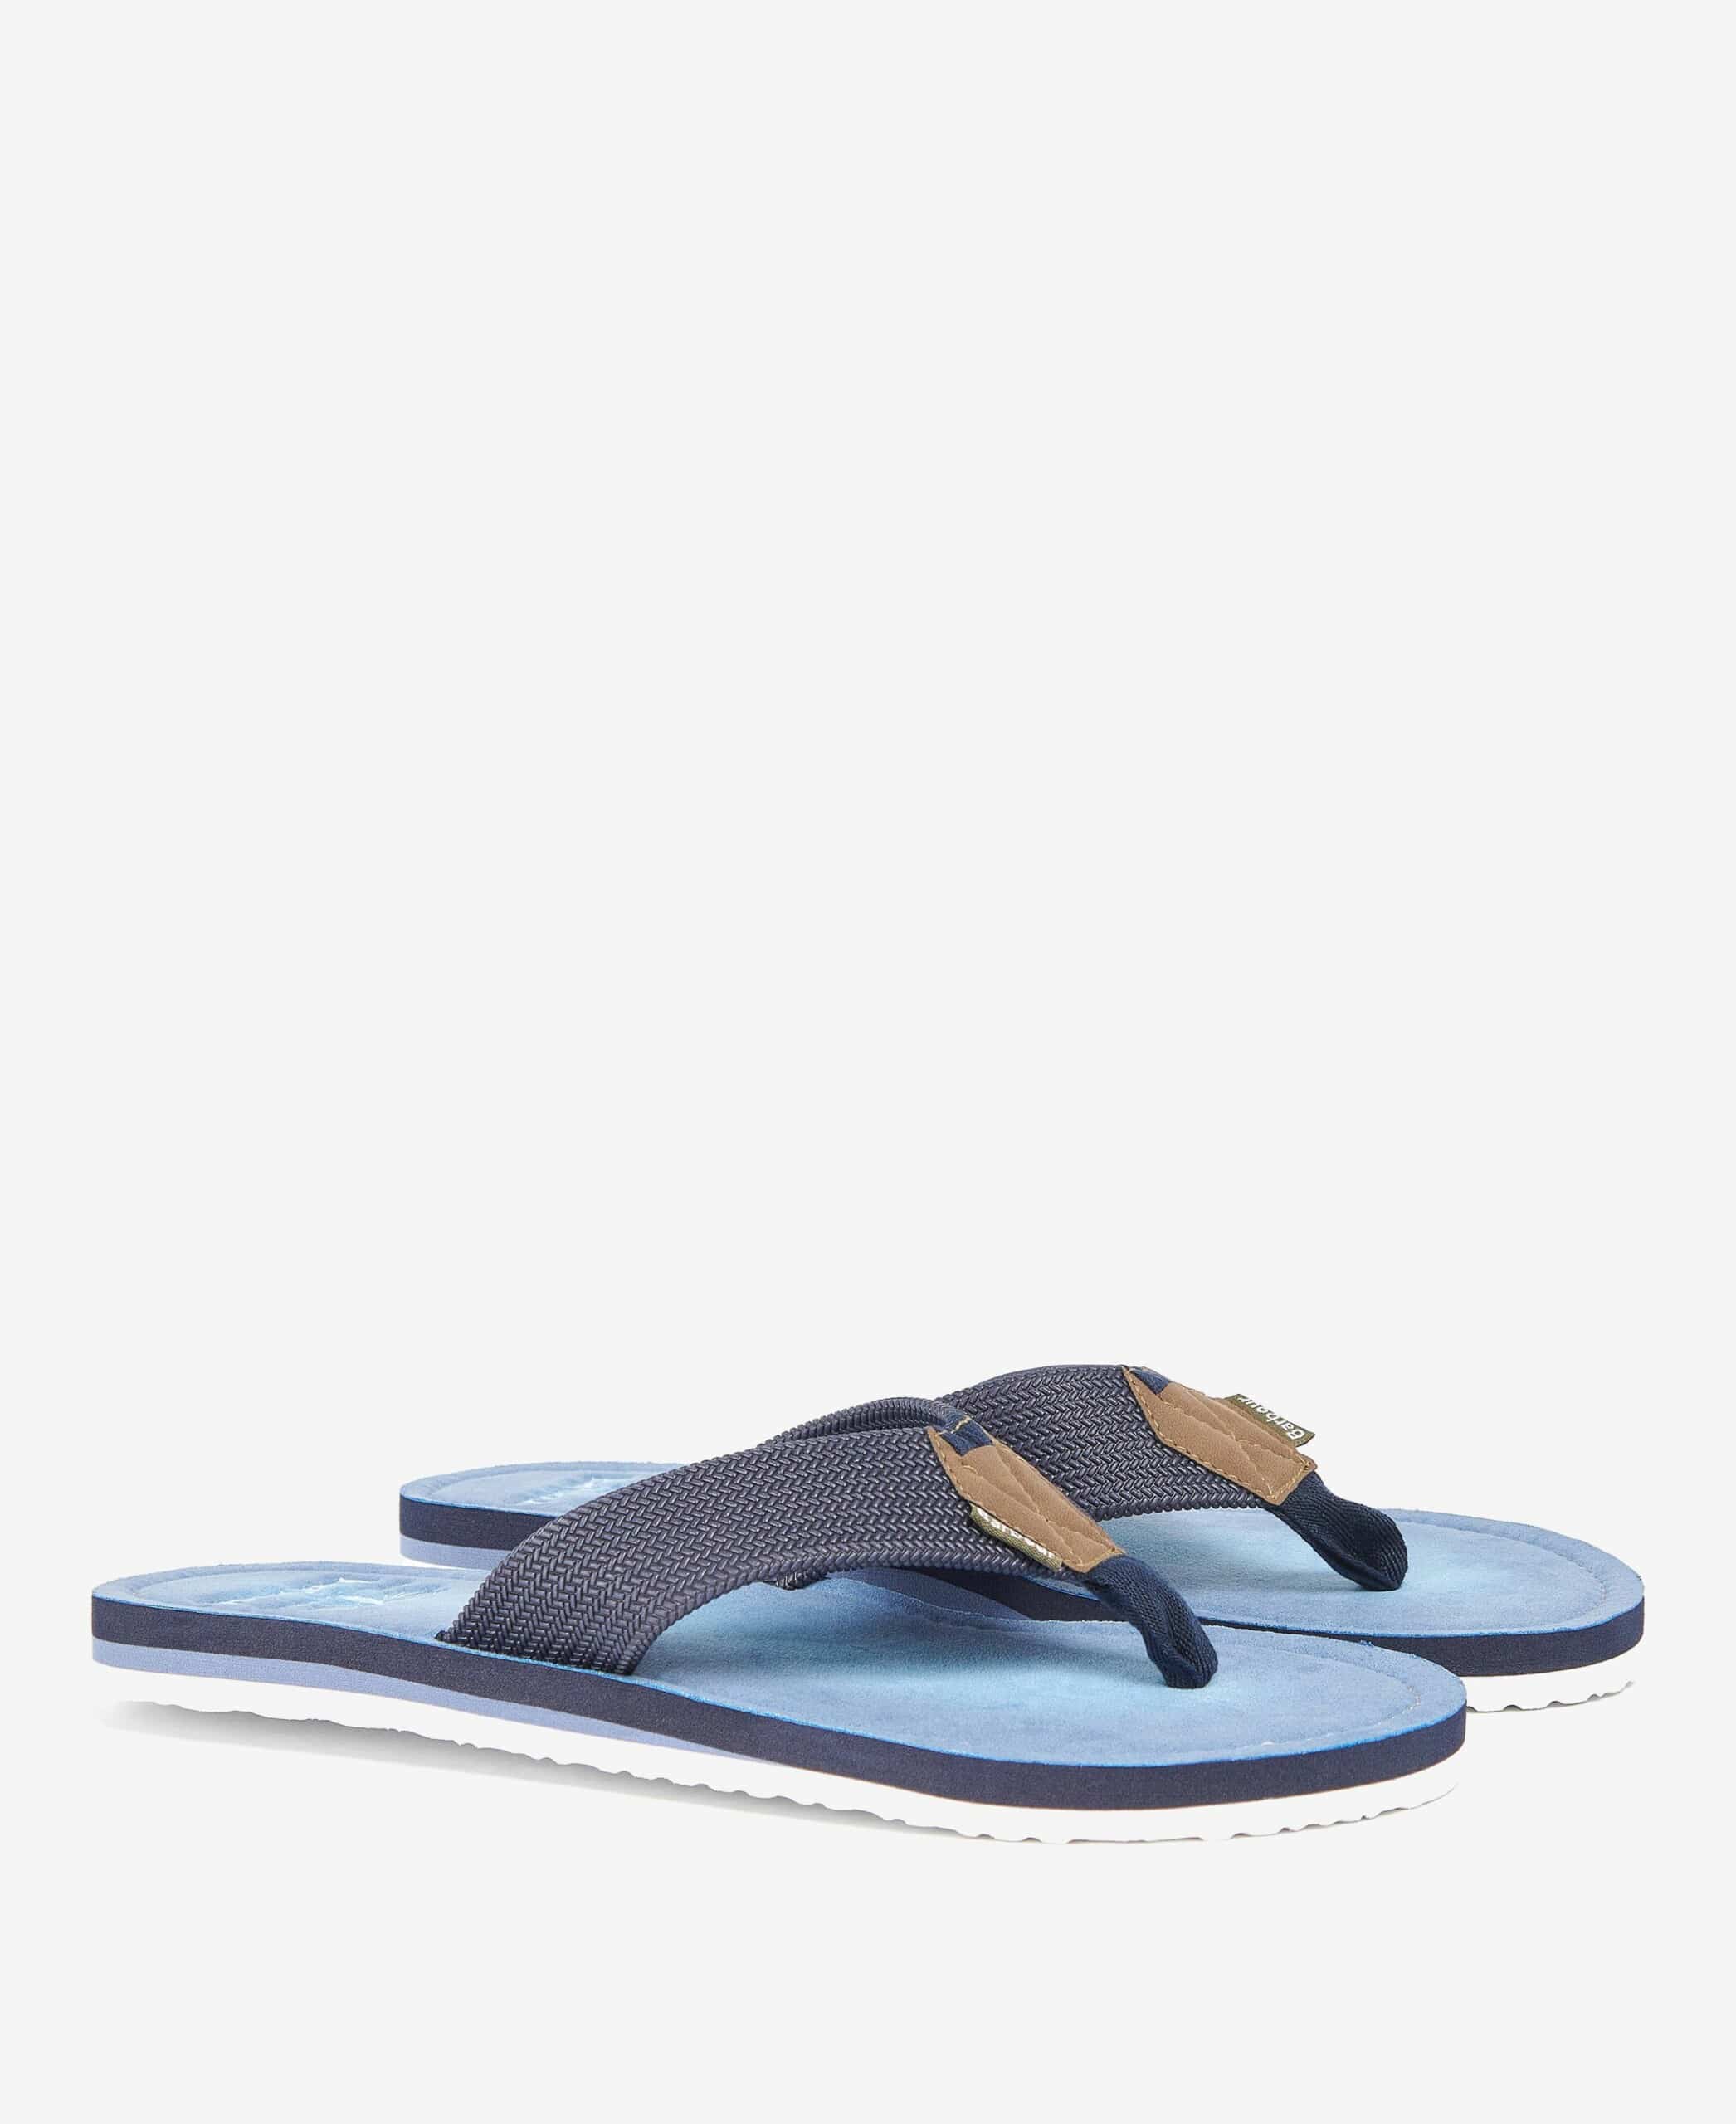 Toeman Sandals – Dusty Blue